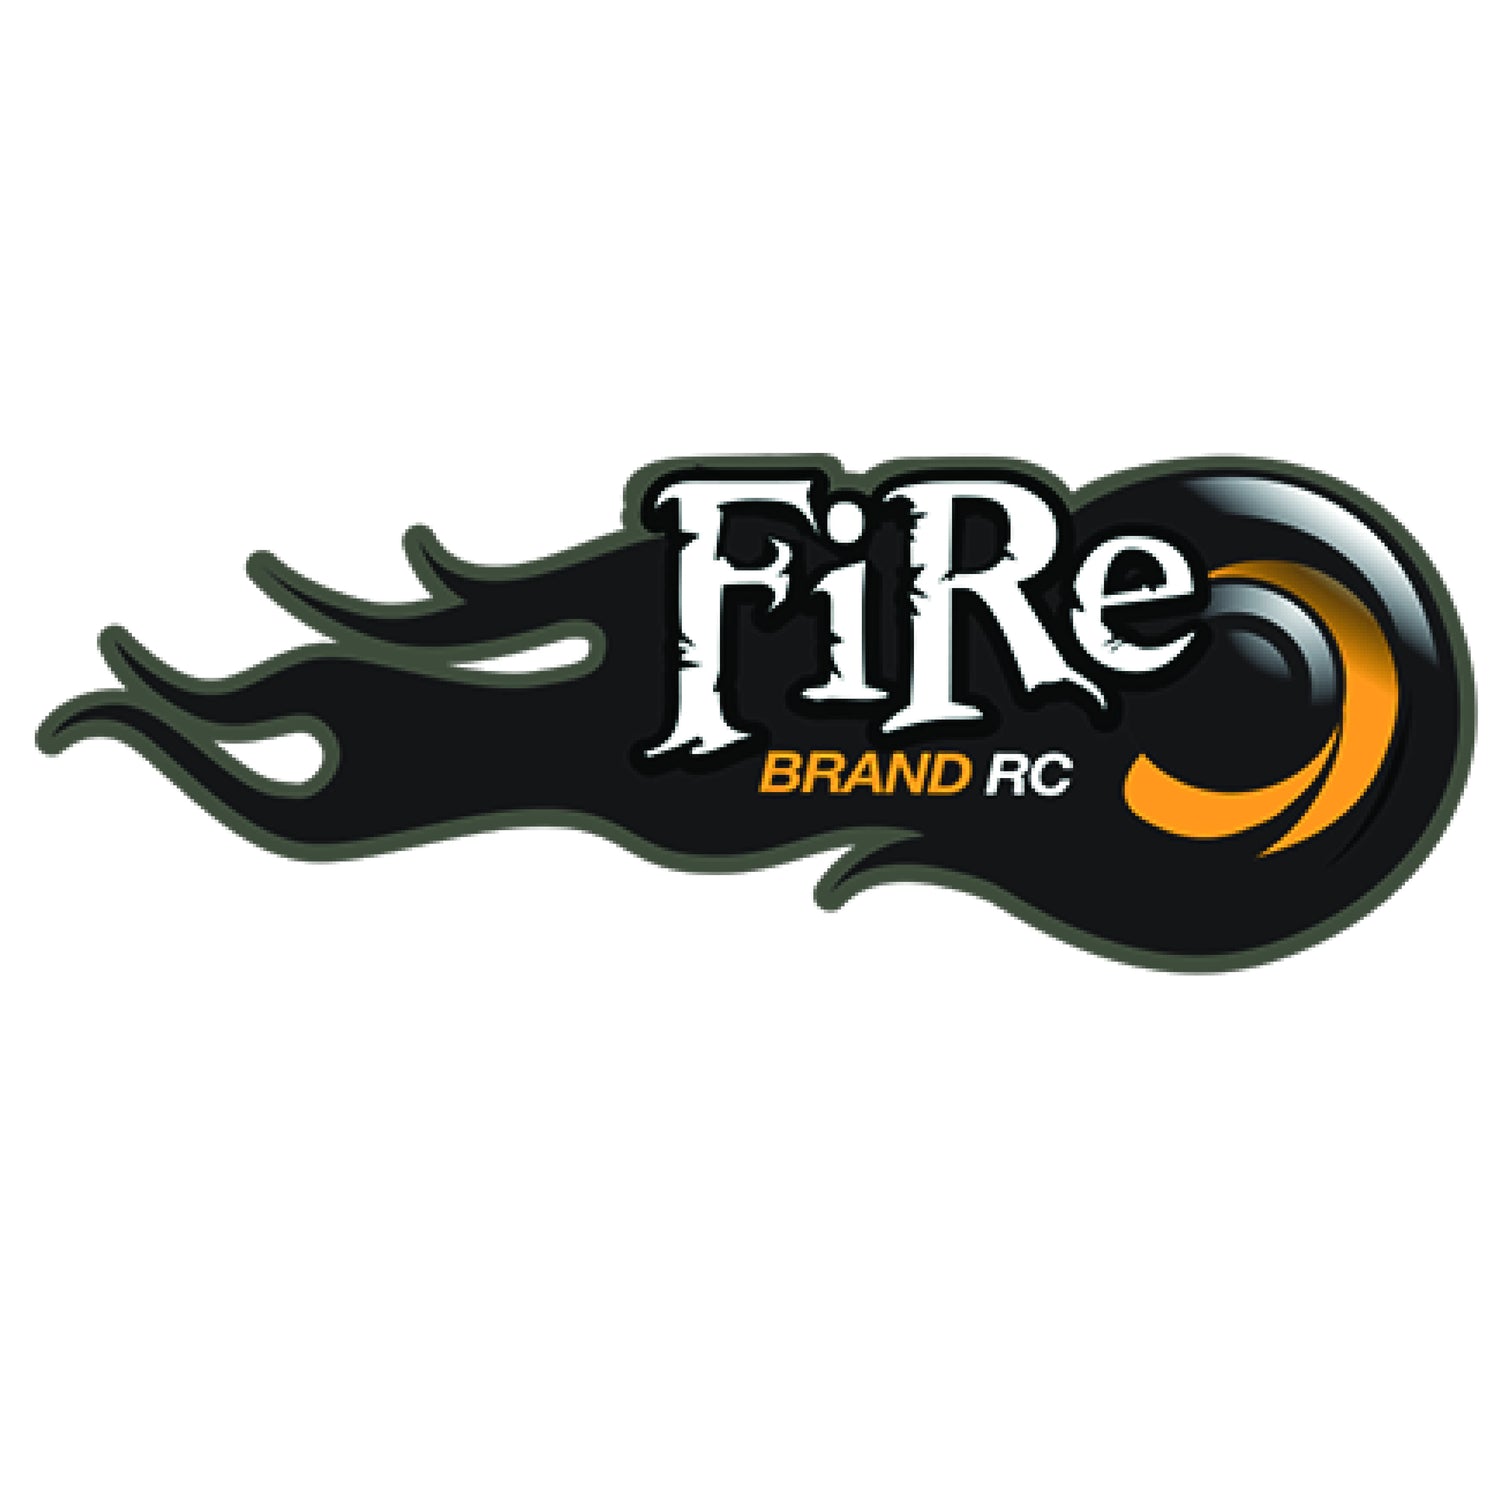 Fire Brand RC